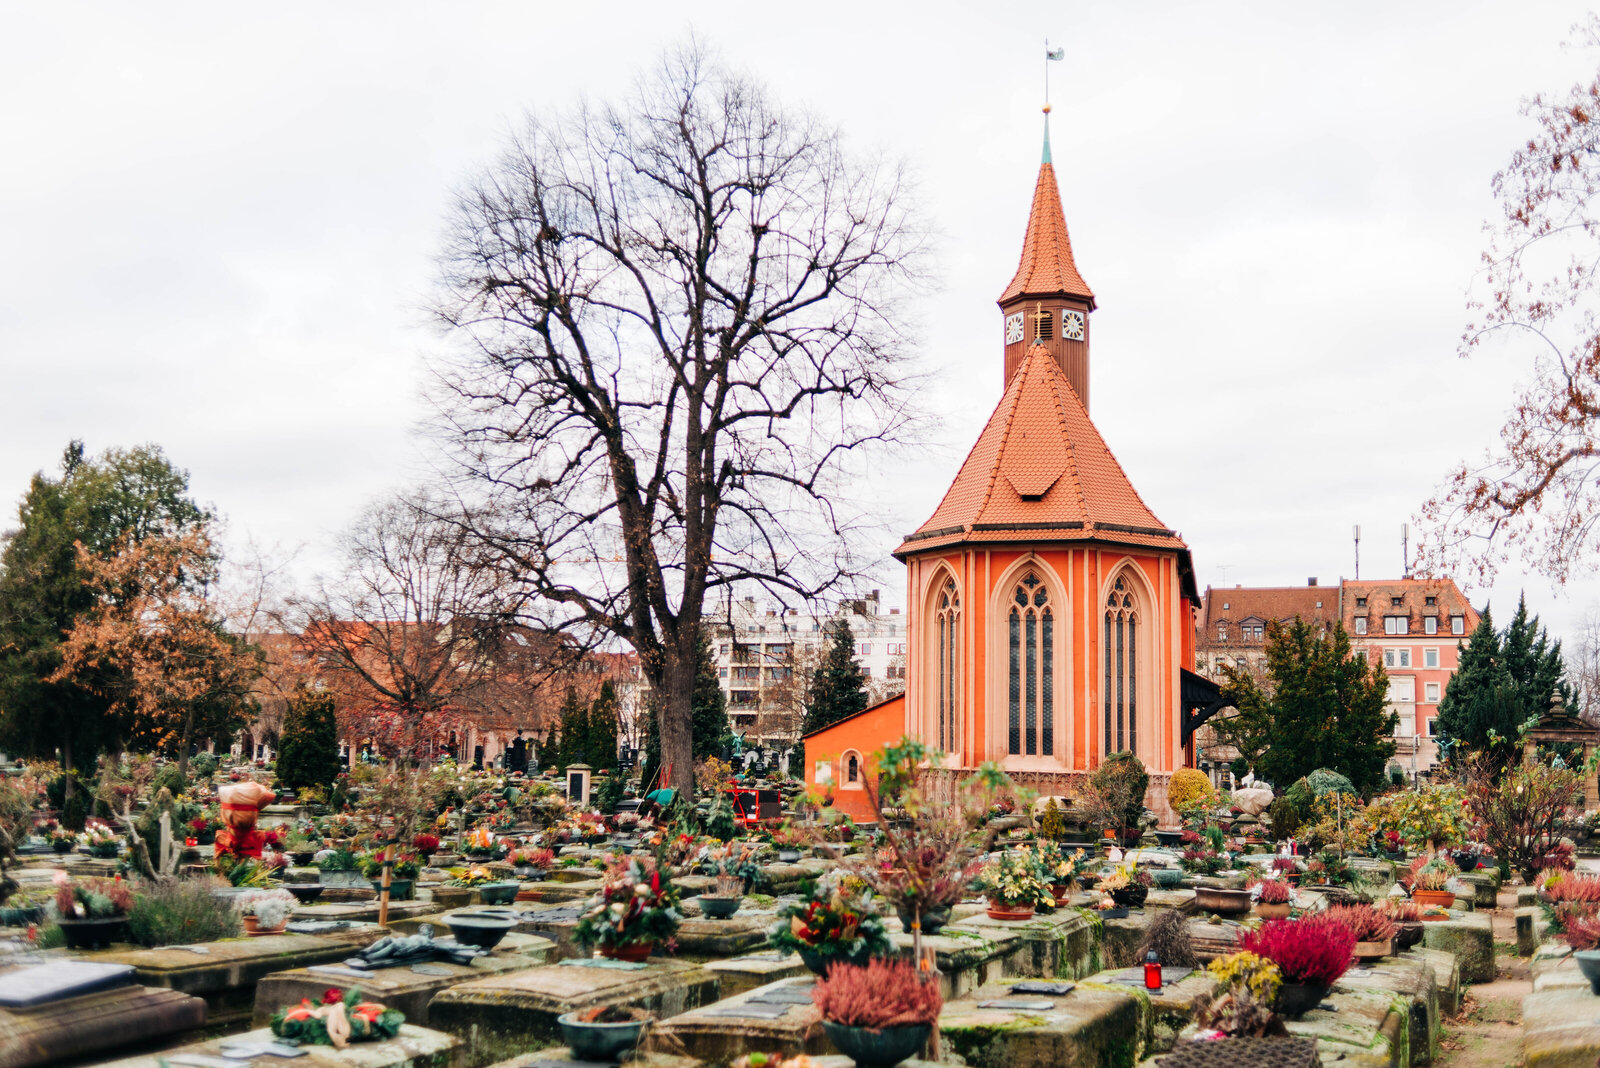 colorful cemetery in Nuremburg, Germany during winter